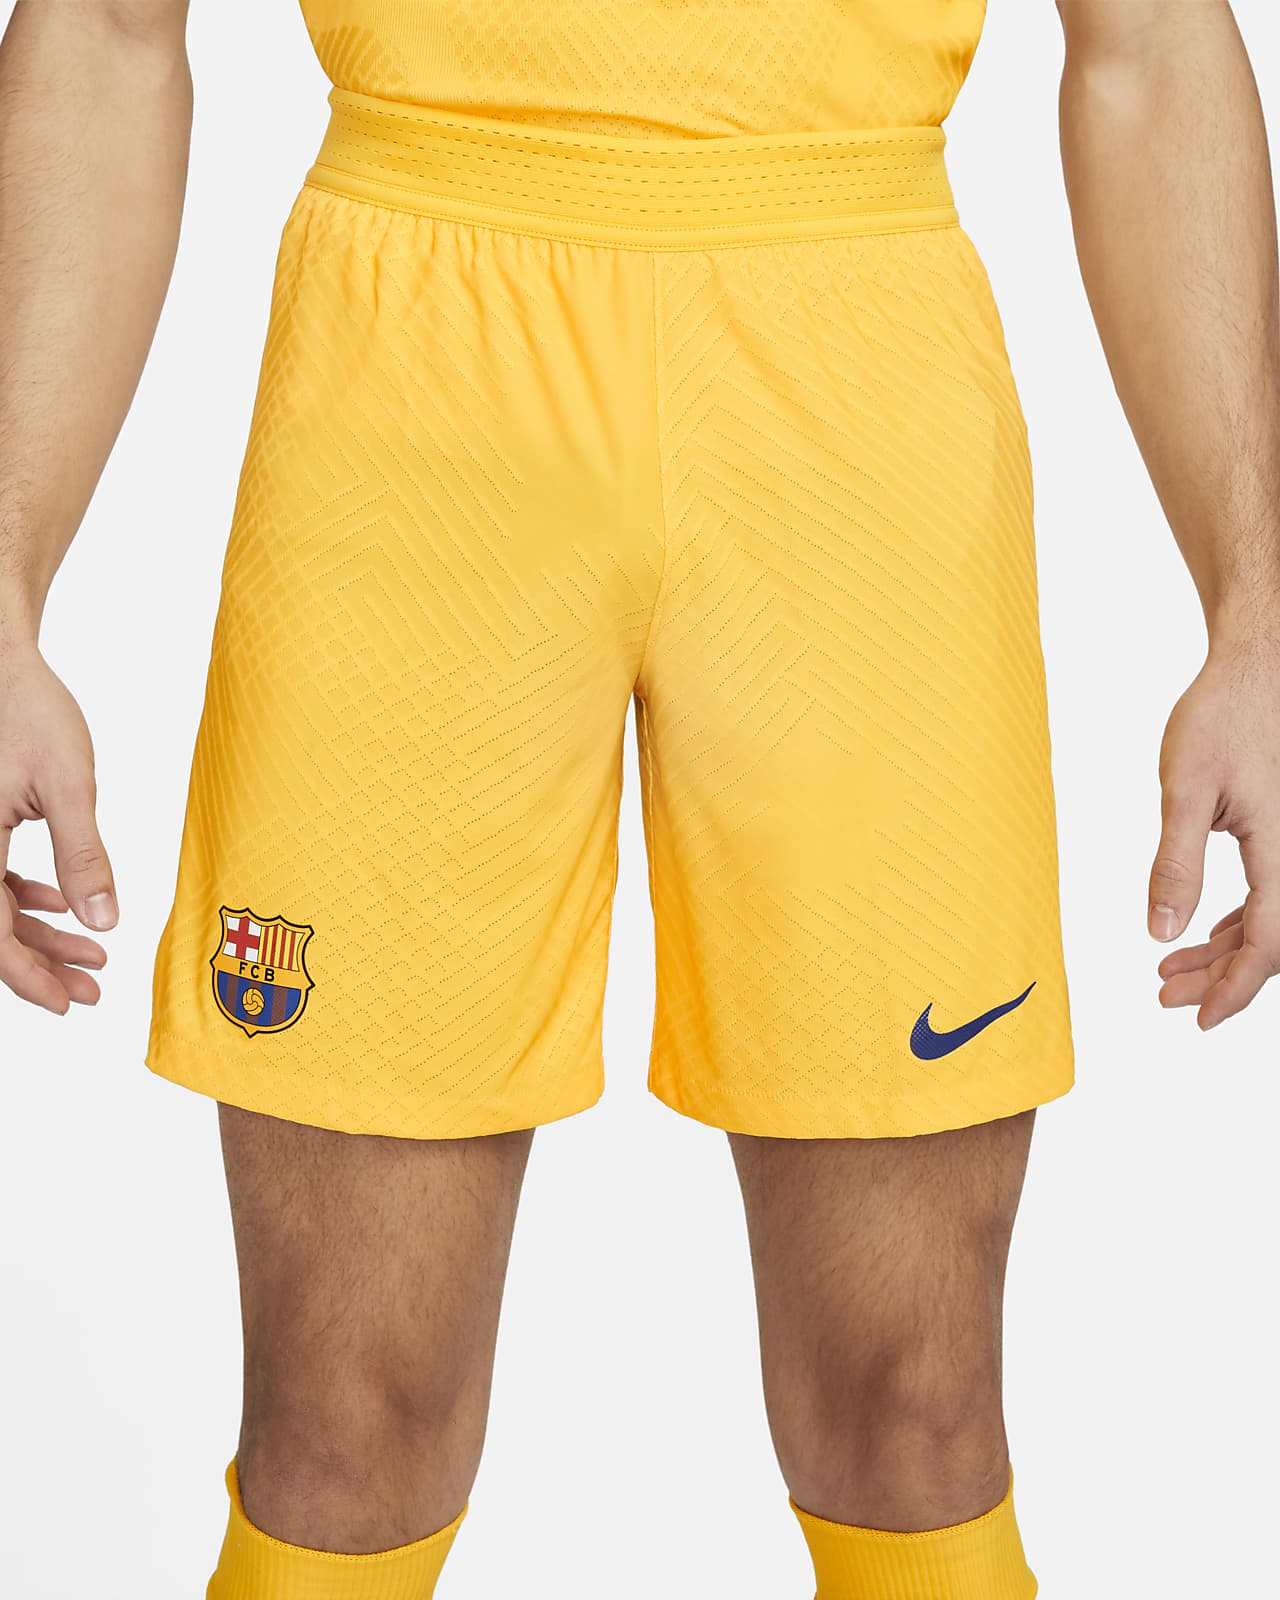 Conjunto Camisa+Shorts Barcelona 22/23 Nike Masculino - Colorido - ID Sports